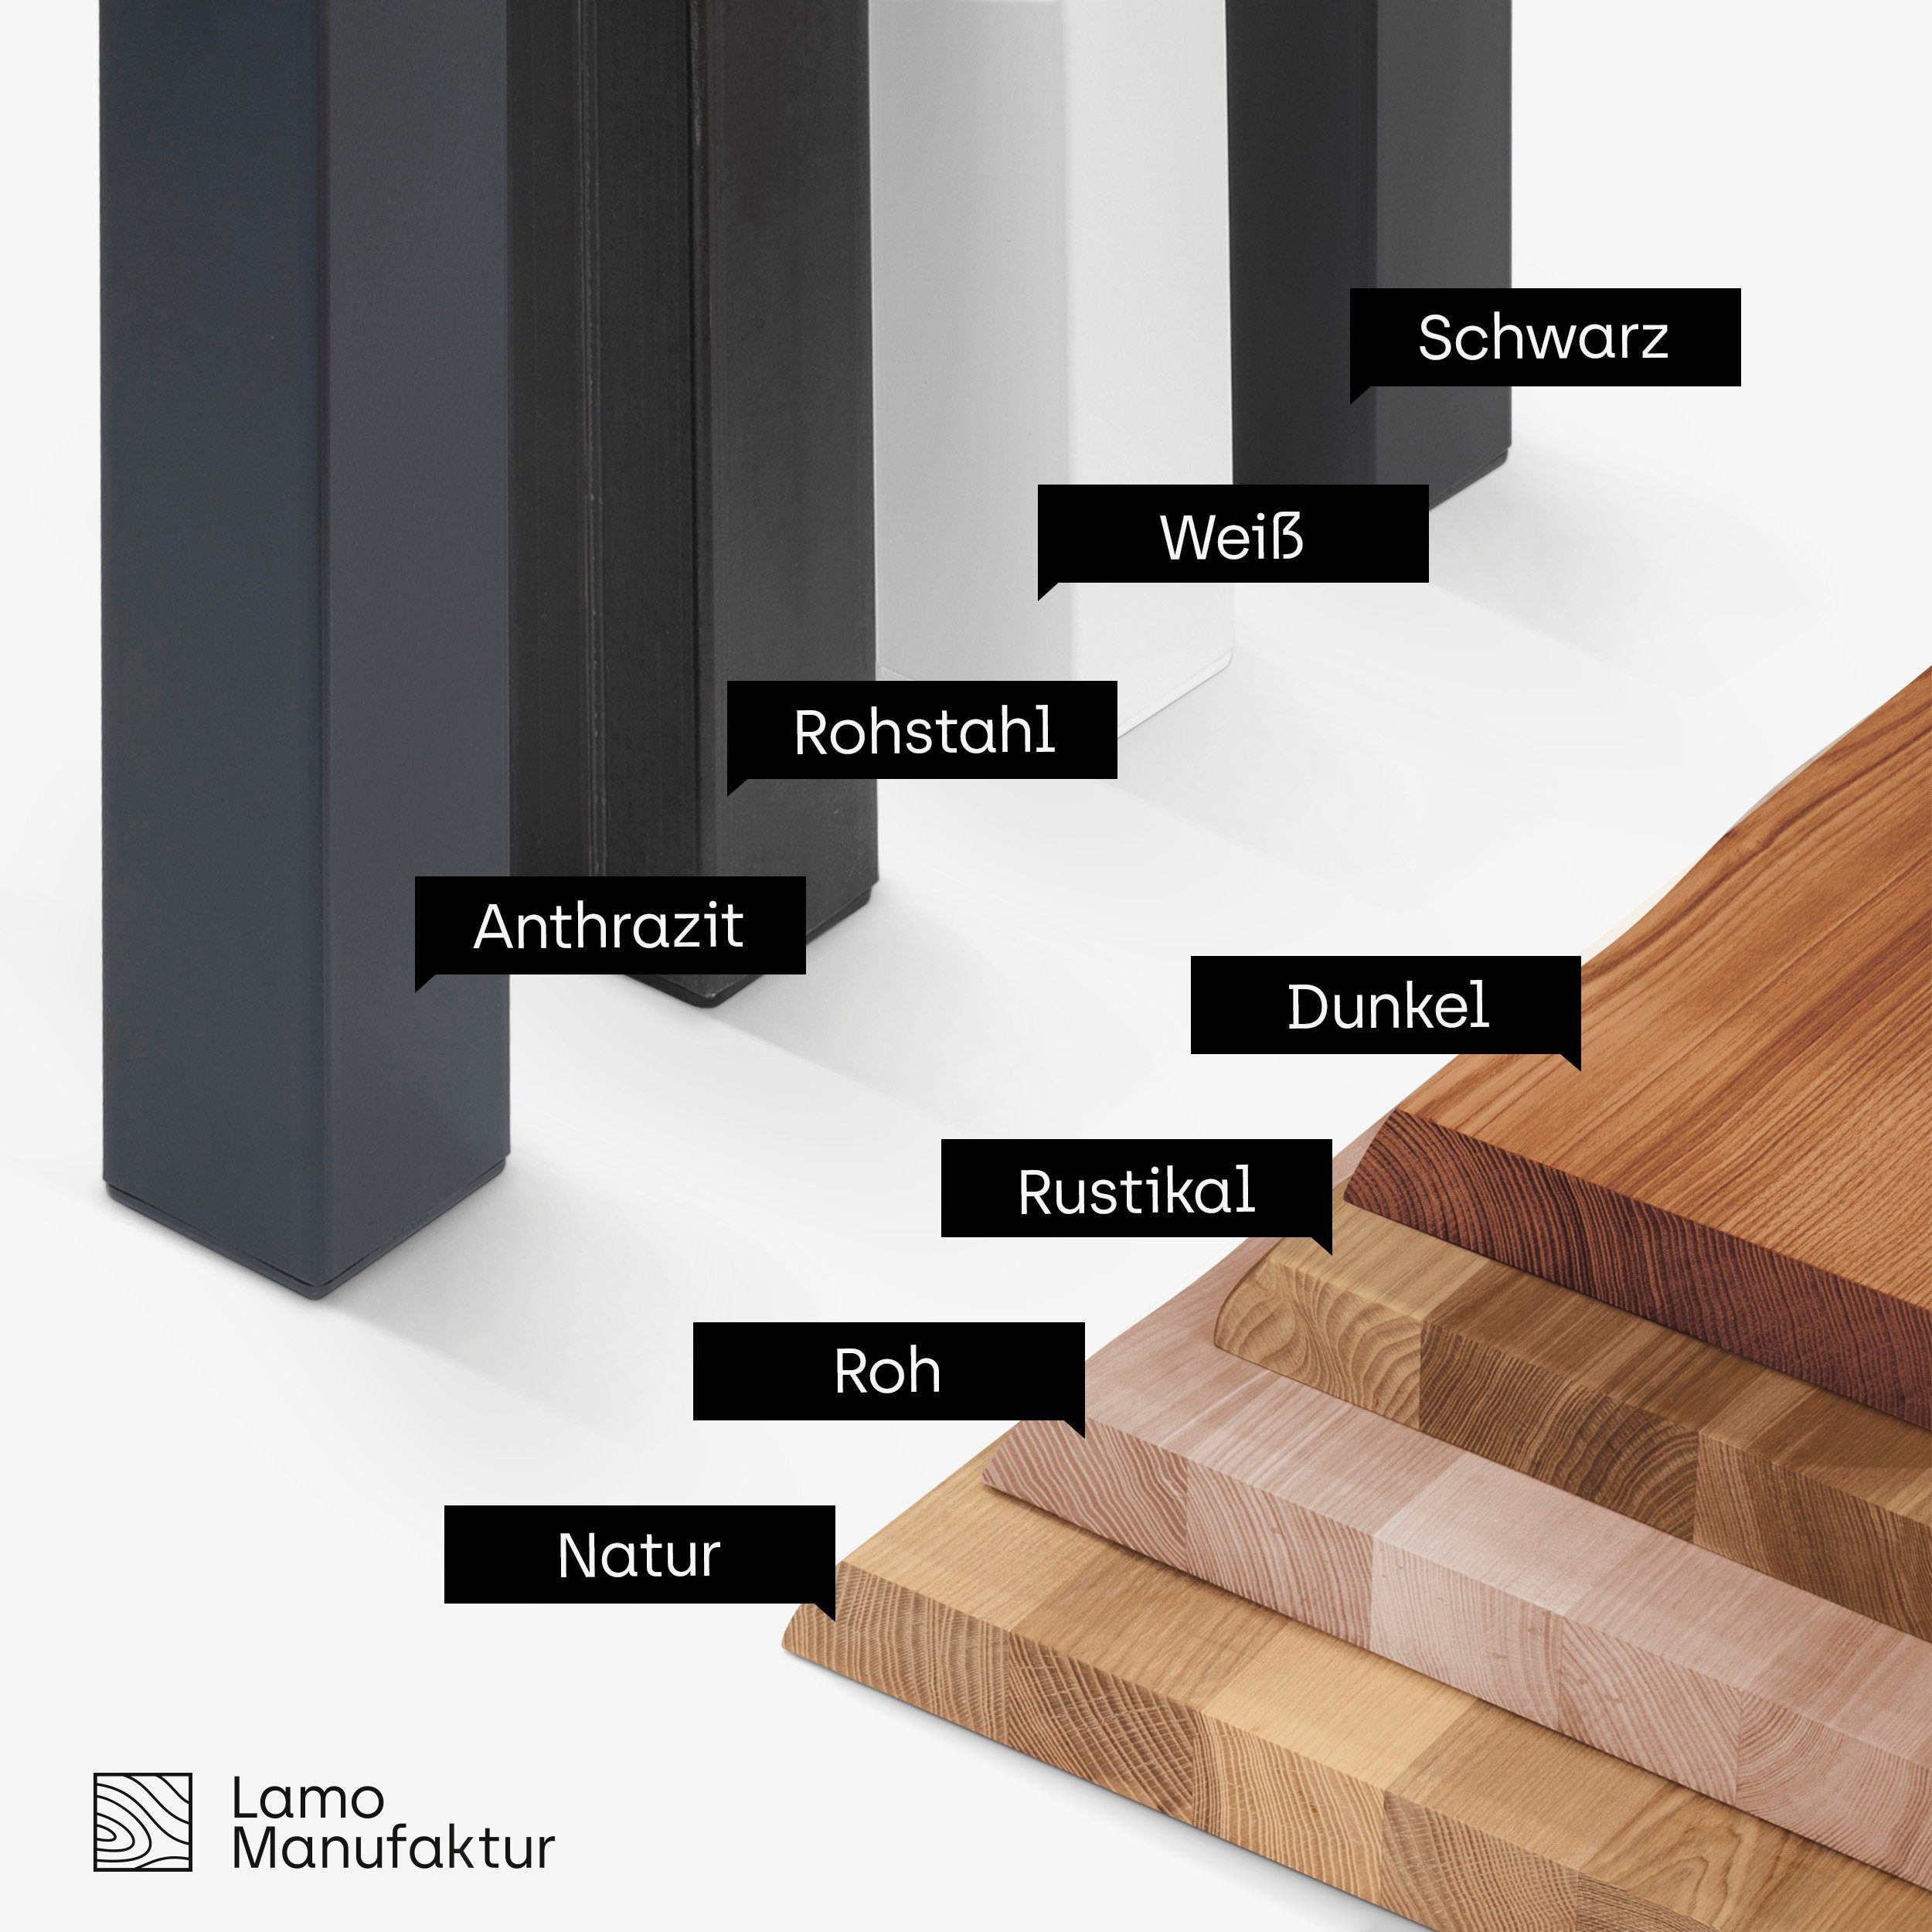 massiv Baumkantentisch | Rohstahl inkl. Natur Baumkante Klarlack Manufaktur Classic mit Massivholz Metallgestell (1 Esstisch LAMO Tisch),